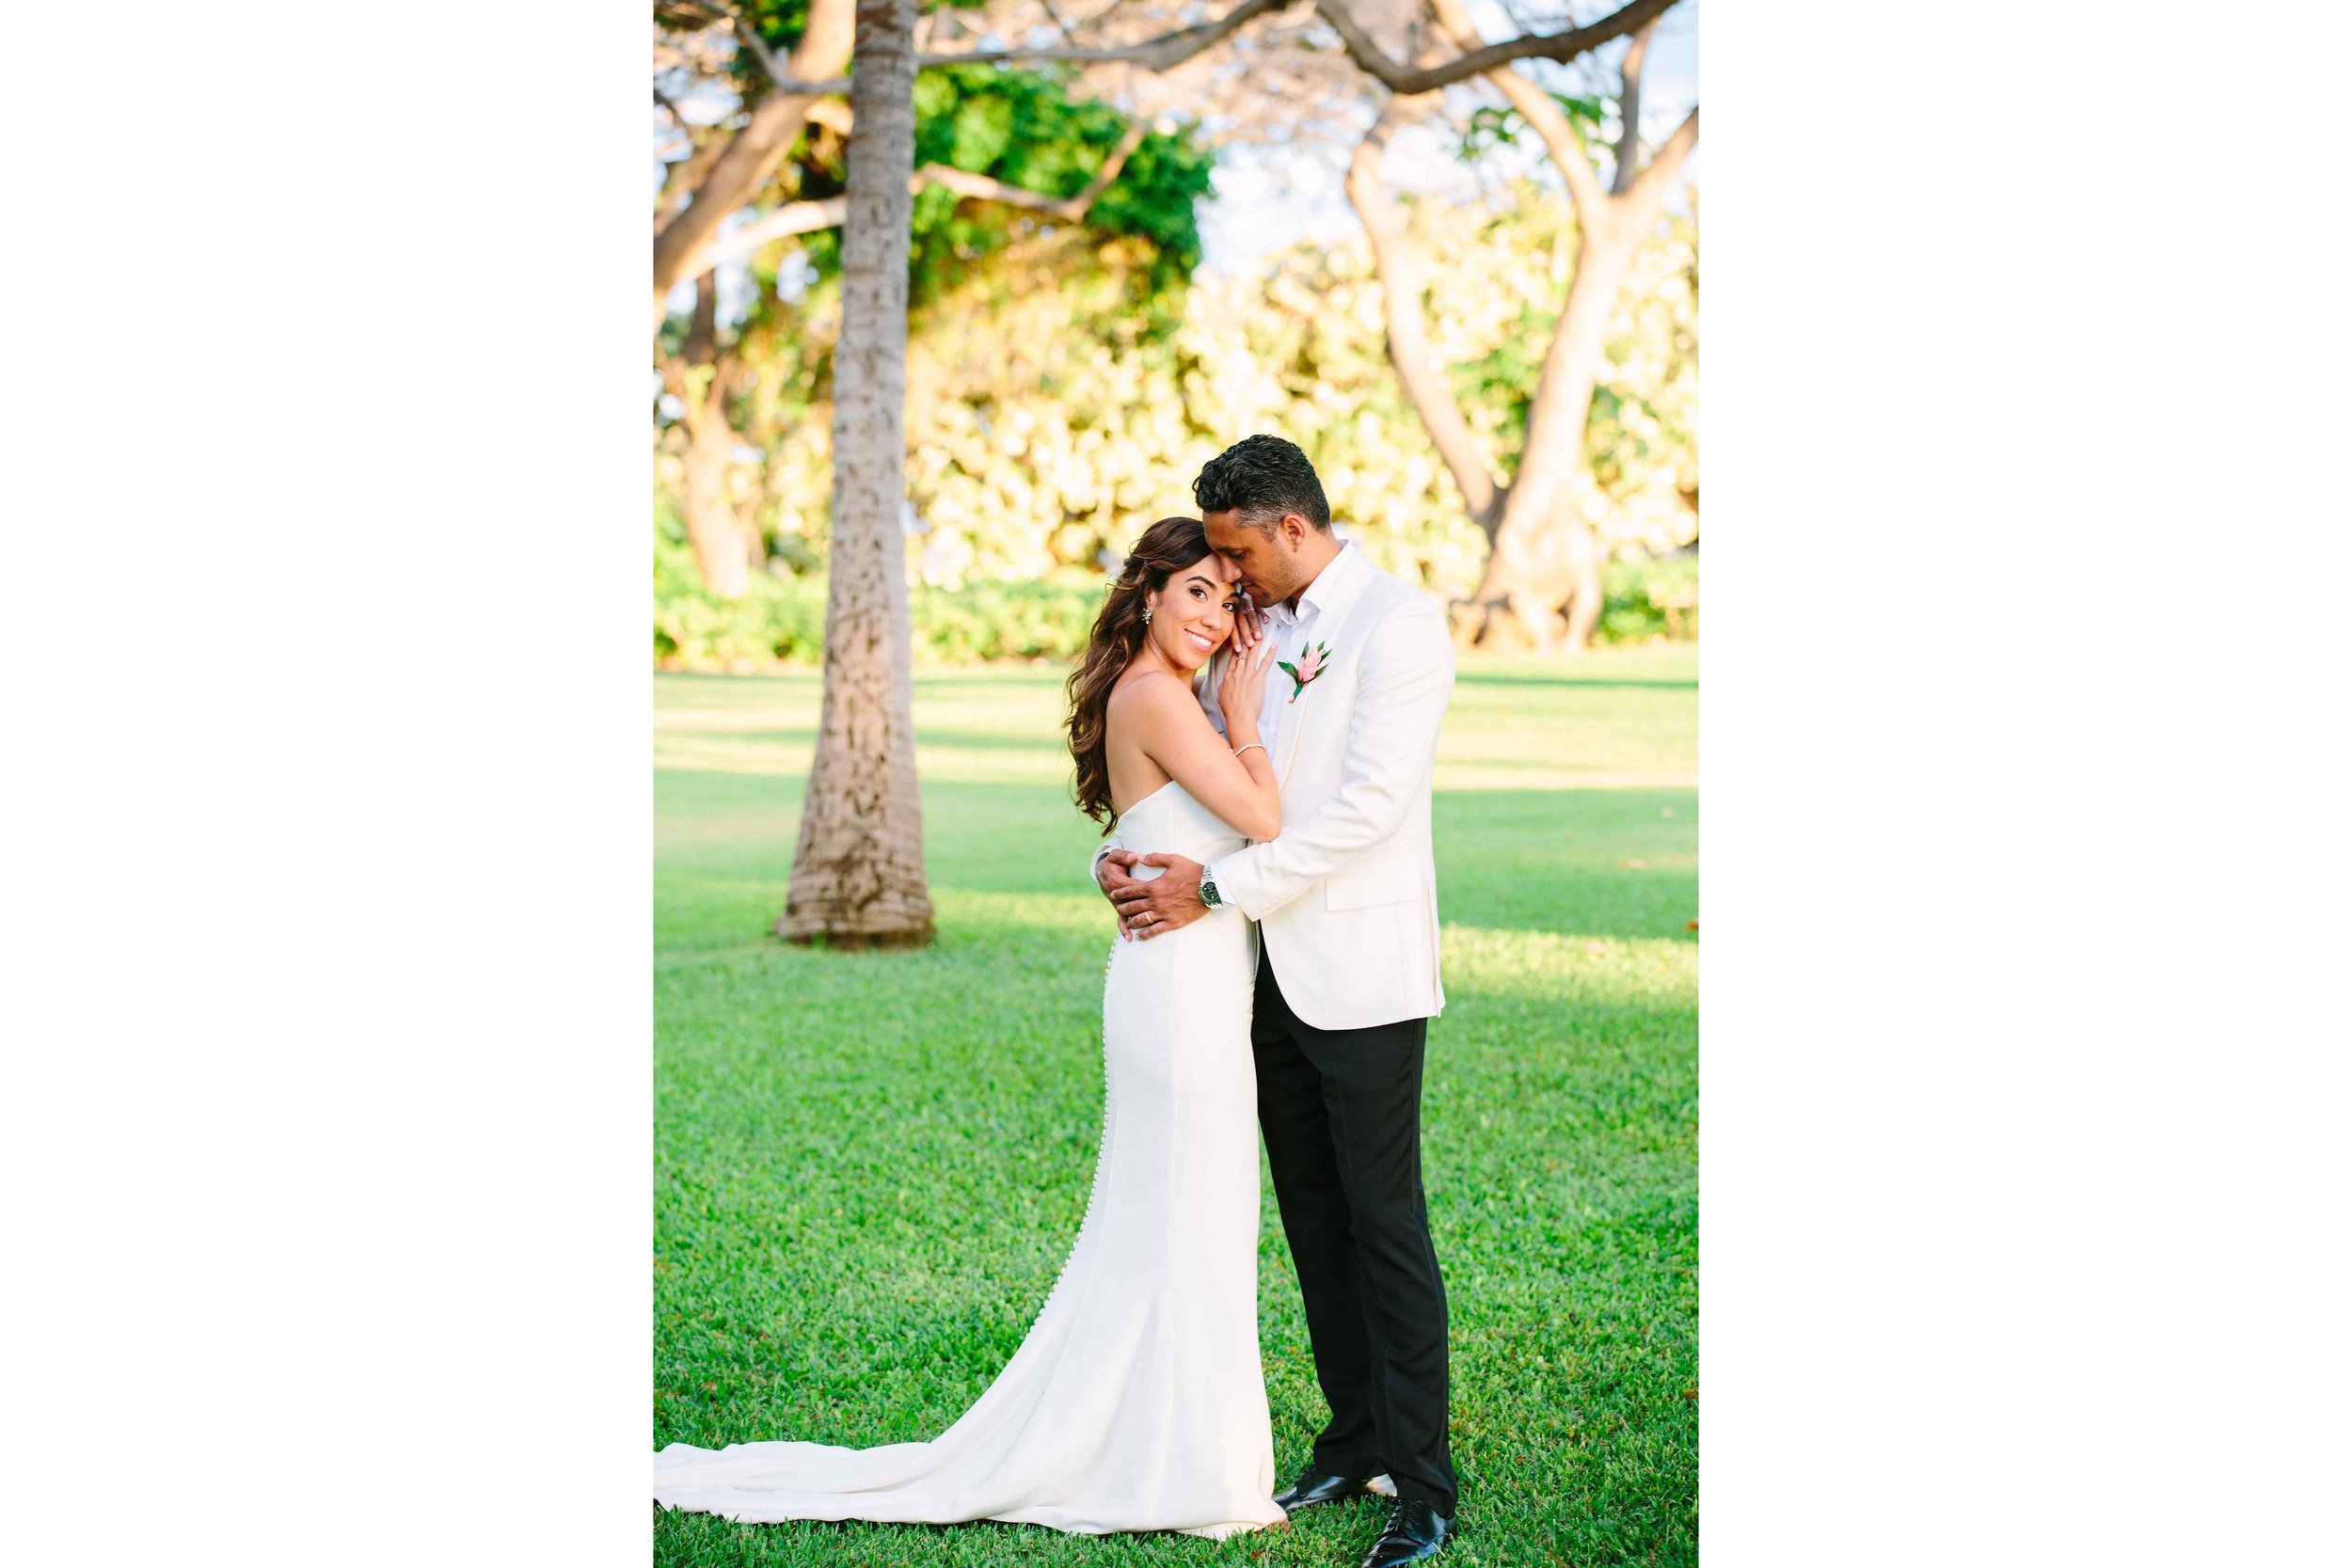 Hawaii Wedding Photographer at Olowalu Plantation 4108.jpg